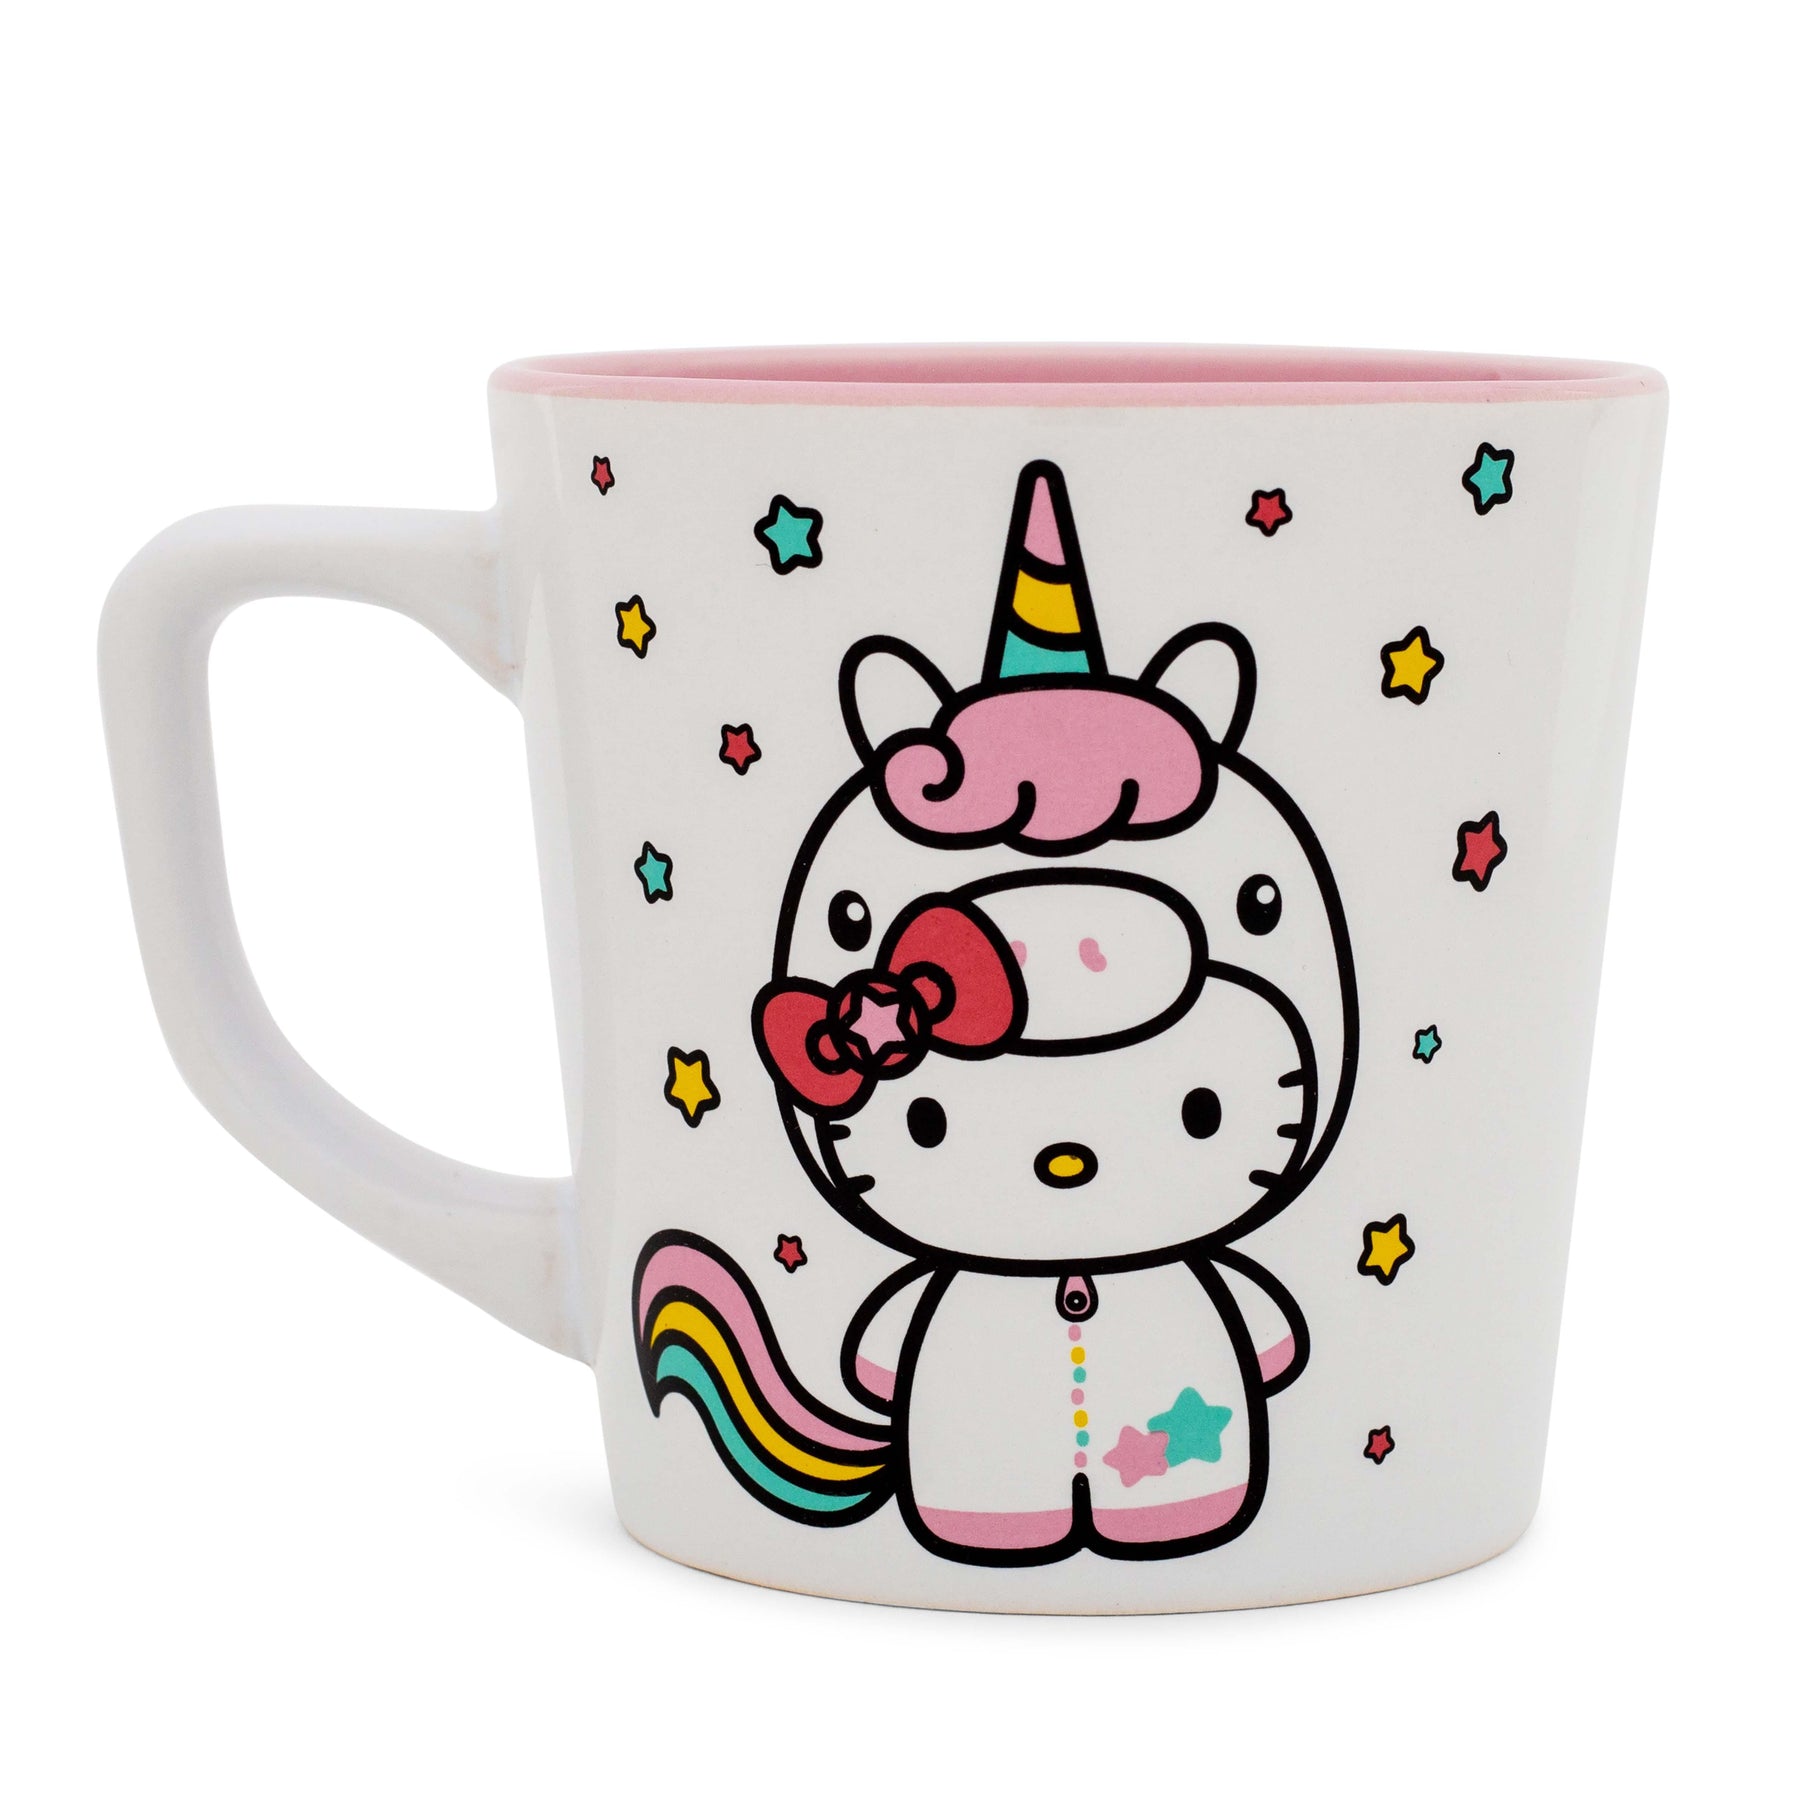 Sanrio Hello Kitty Unicorn Ceramic Latte Mug | Holds 17 Ounces